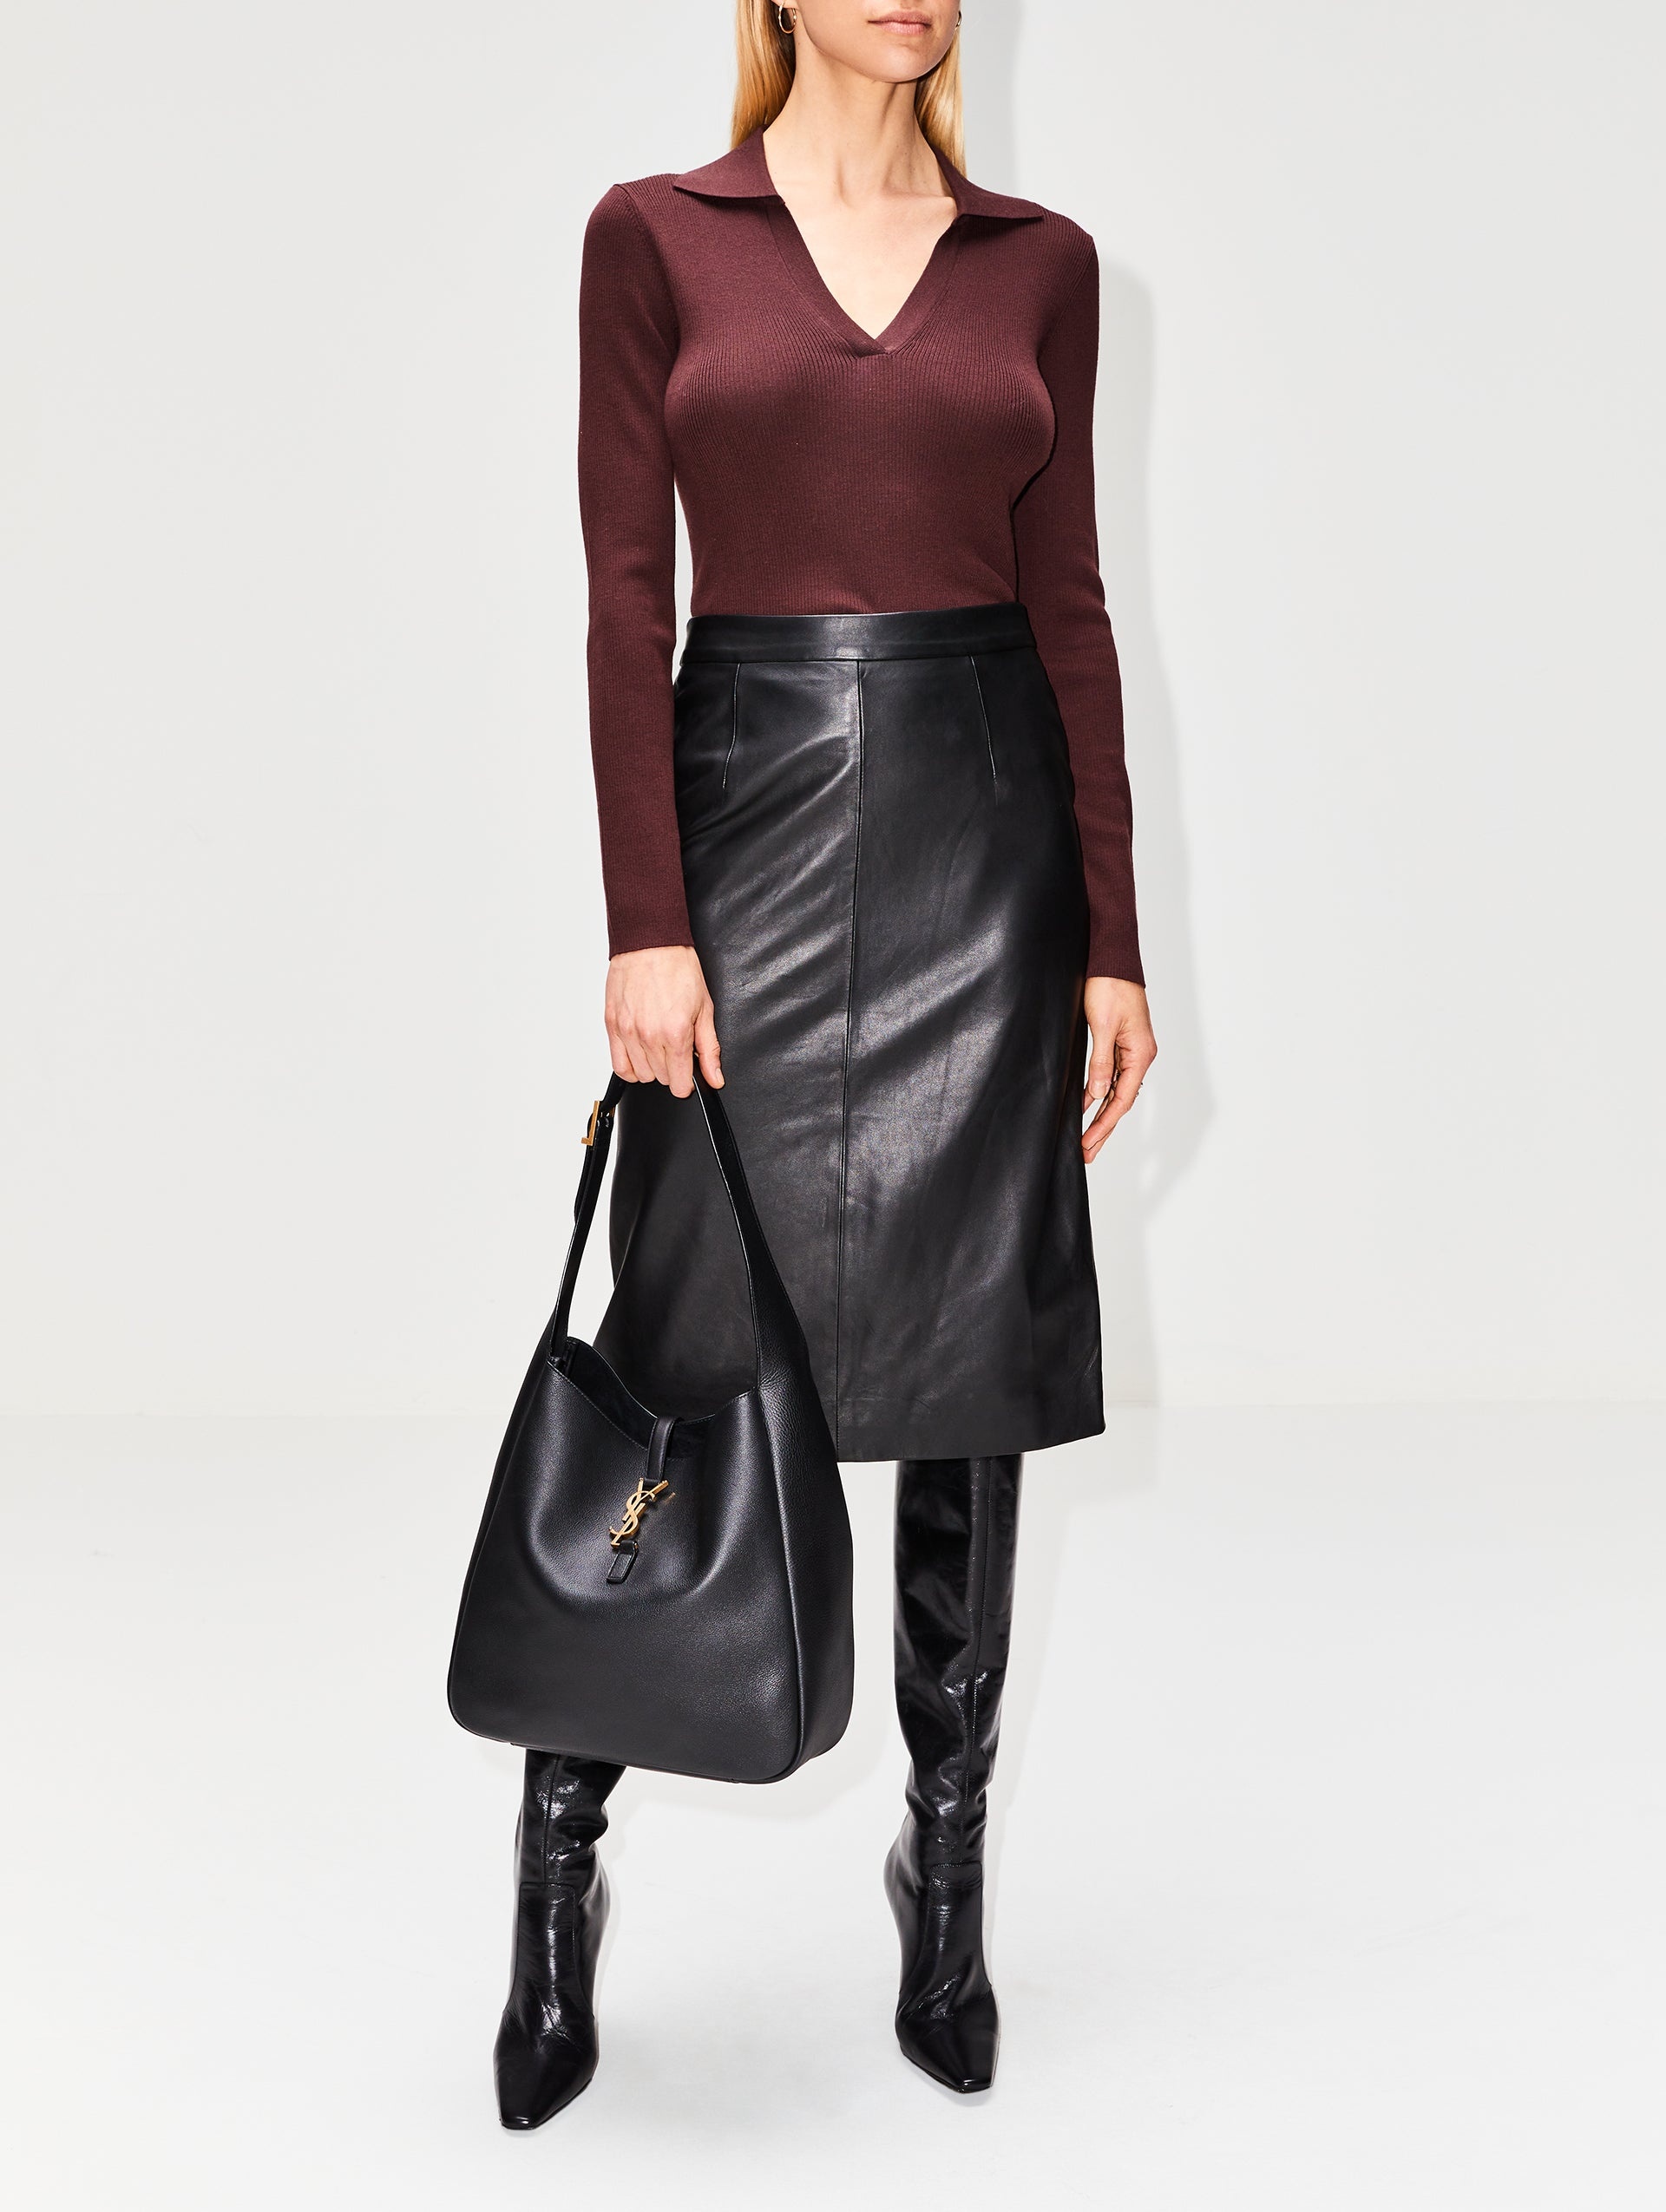 Leonie Leather Skirt - 2